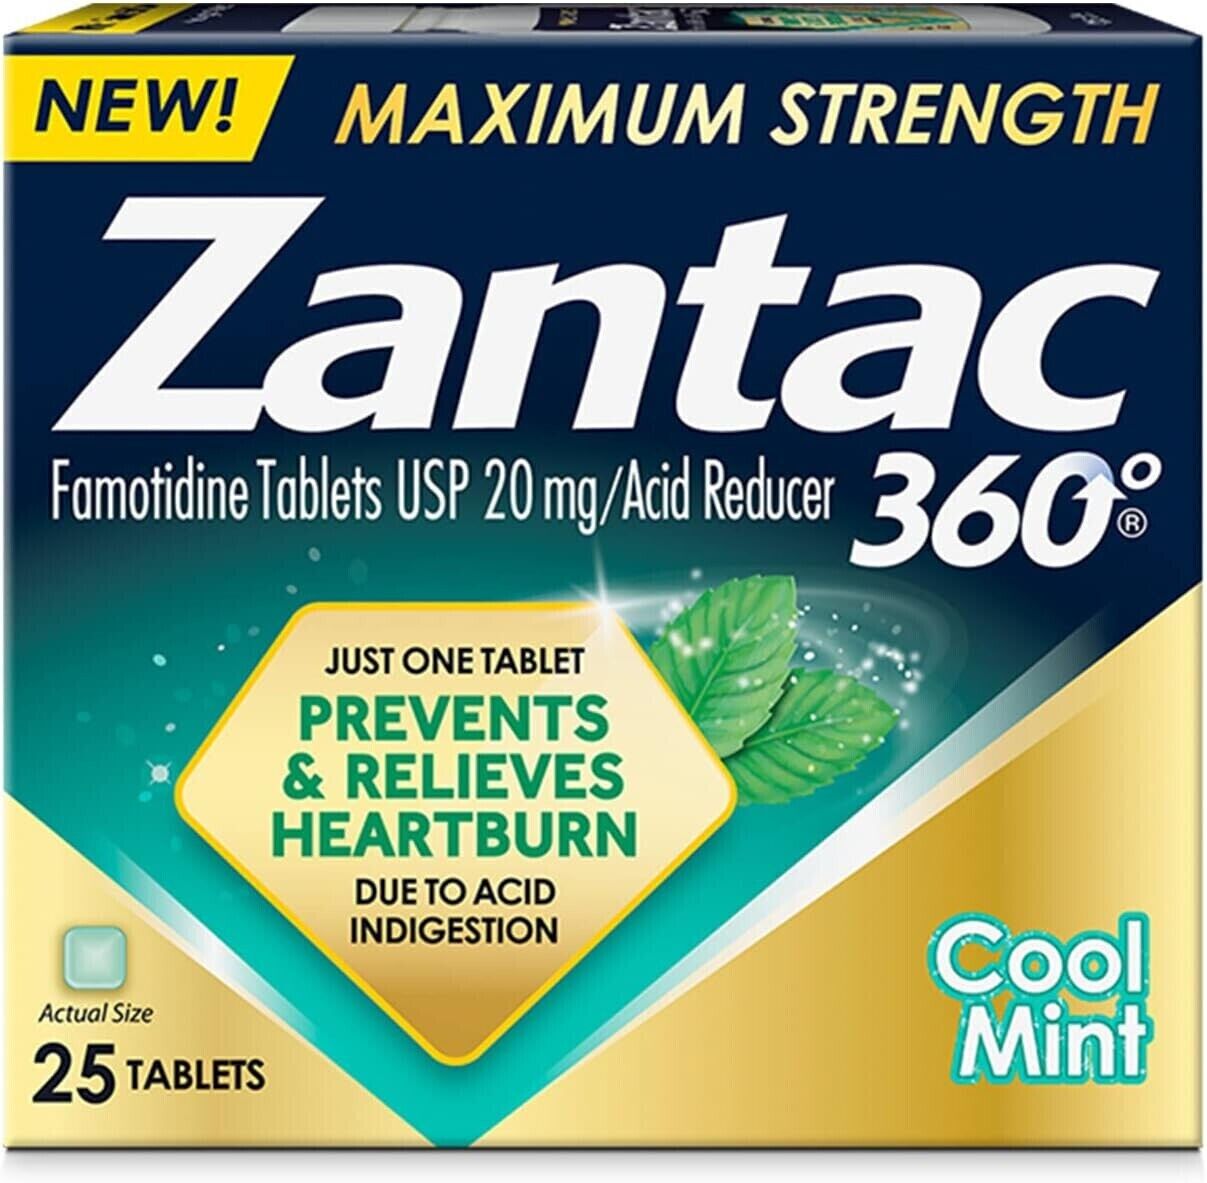 Zantac 360 Maximum Strength Famotidine 20mg Heartburn, 25 ct Cool Mint ex2/2025